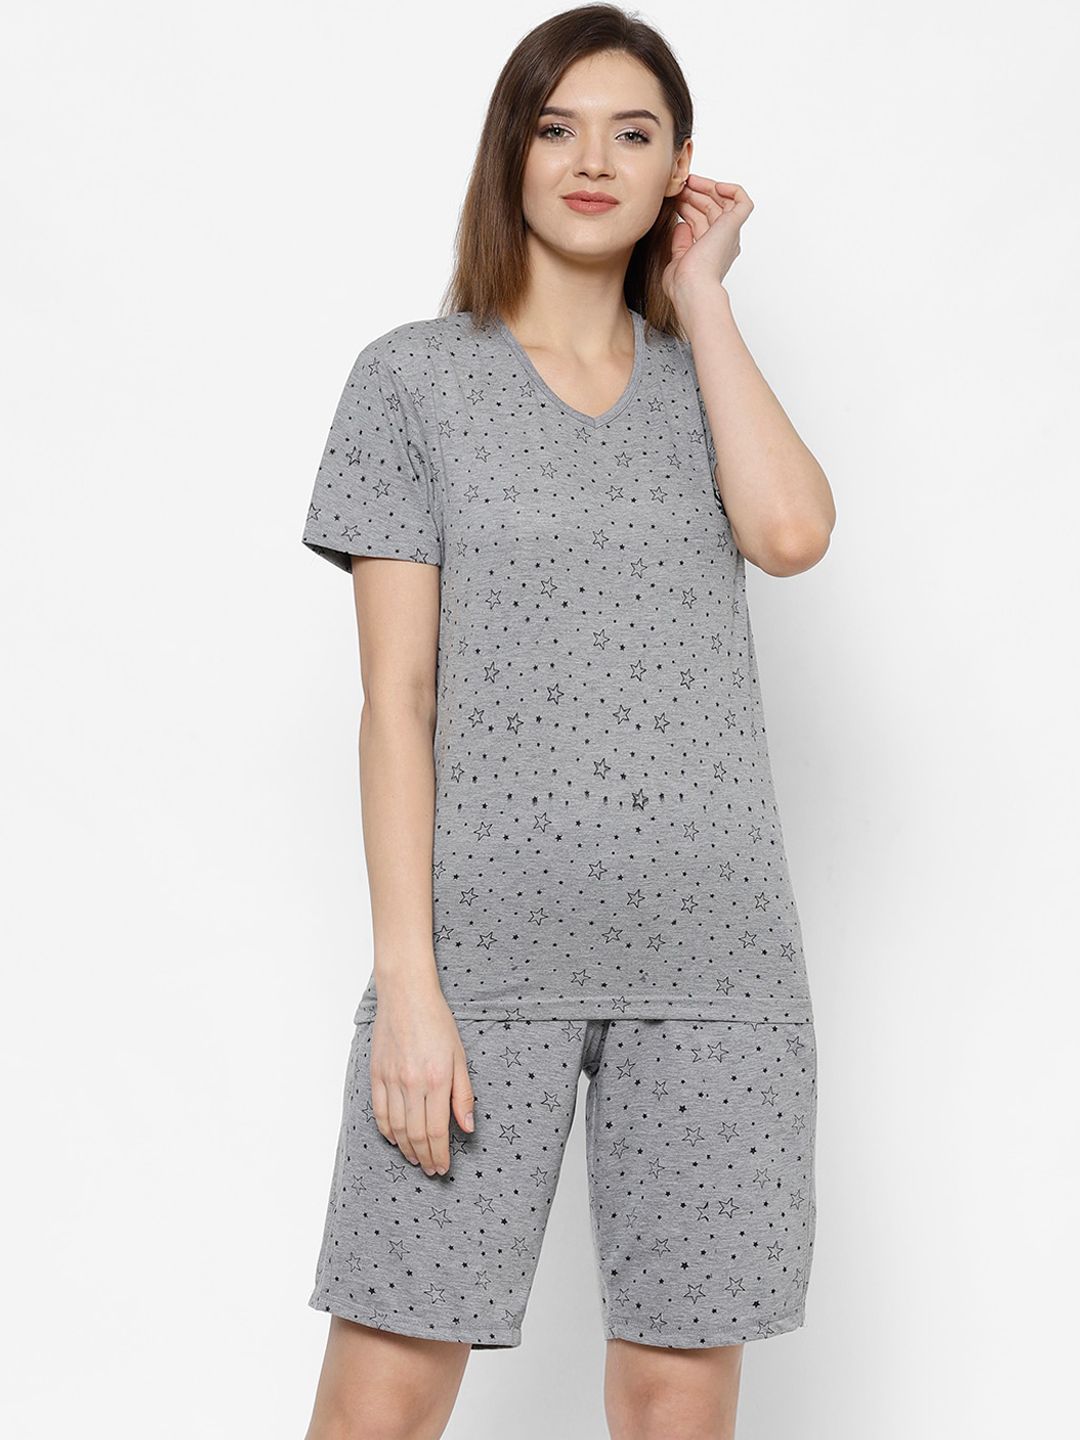 VIMAL JONNEY Women Grey & Black Printed T-shirt and Shorts Price in India